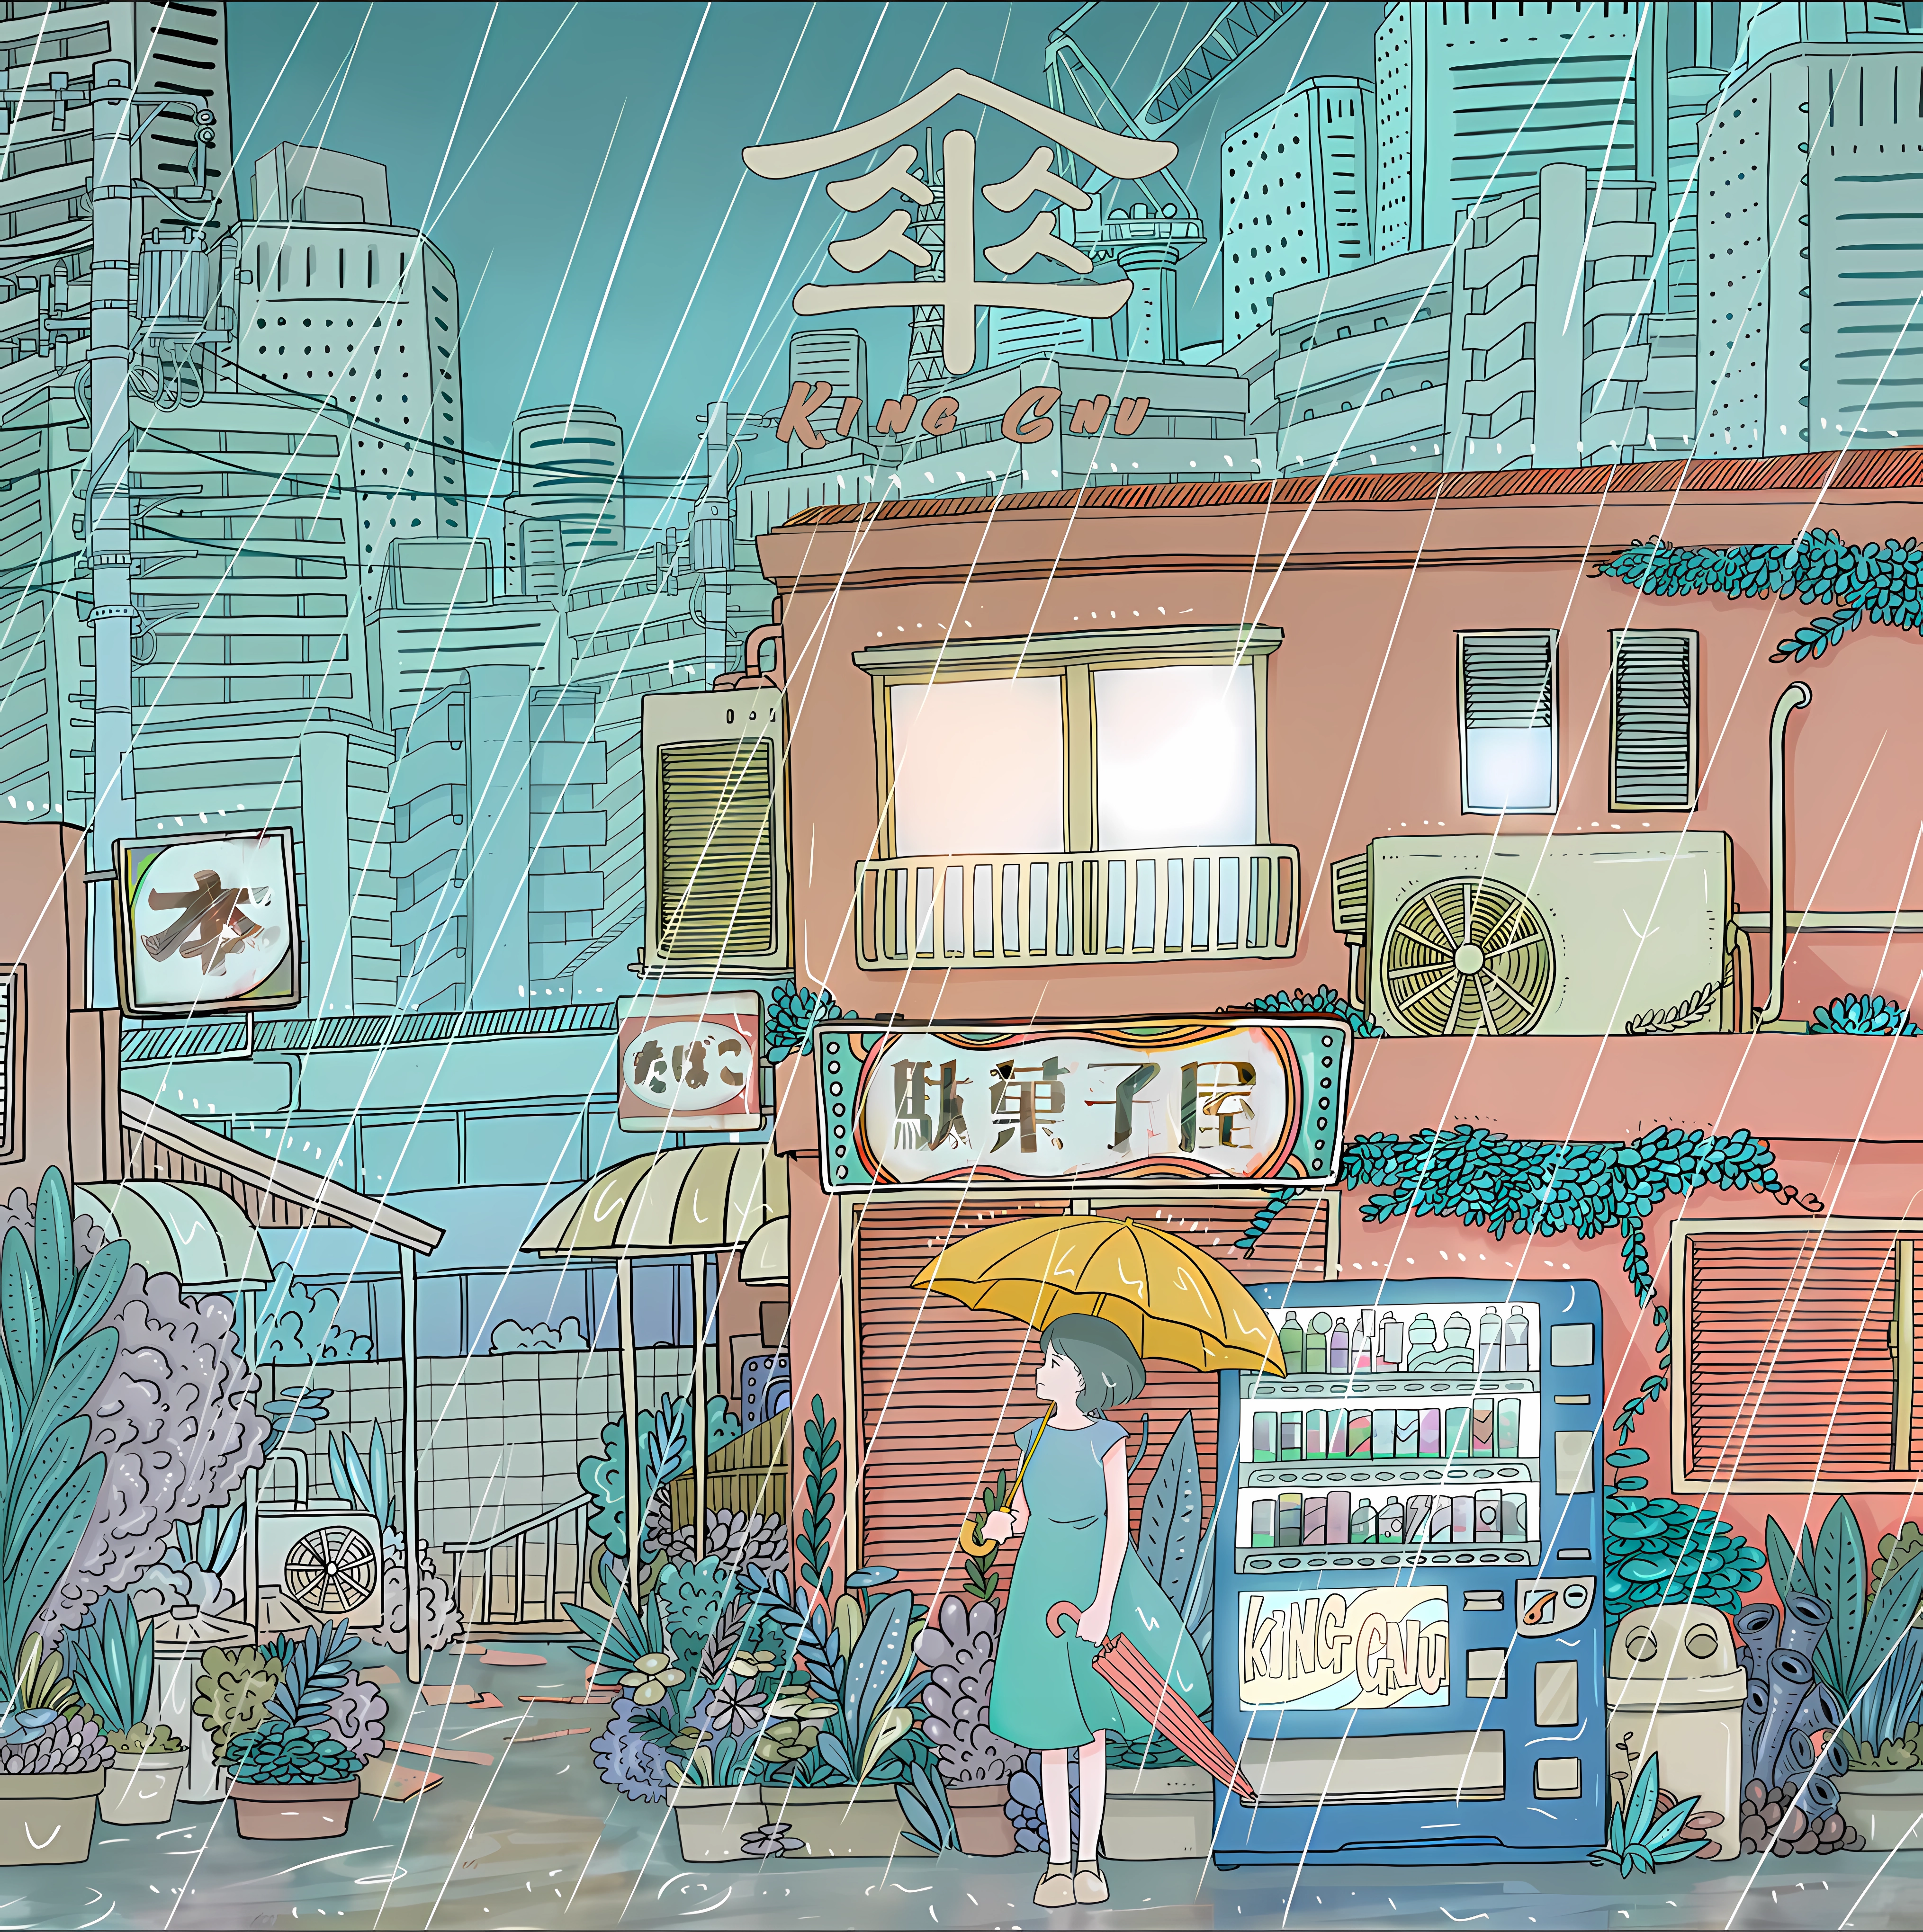 Albums Music Anime Girls Umbrella Rain City Plants Building Vending Machine 4060x4080